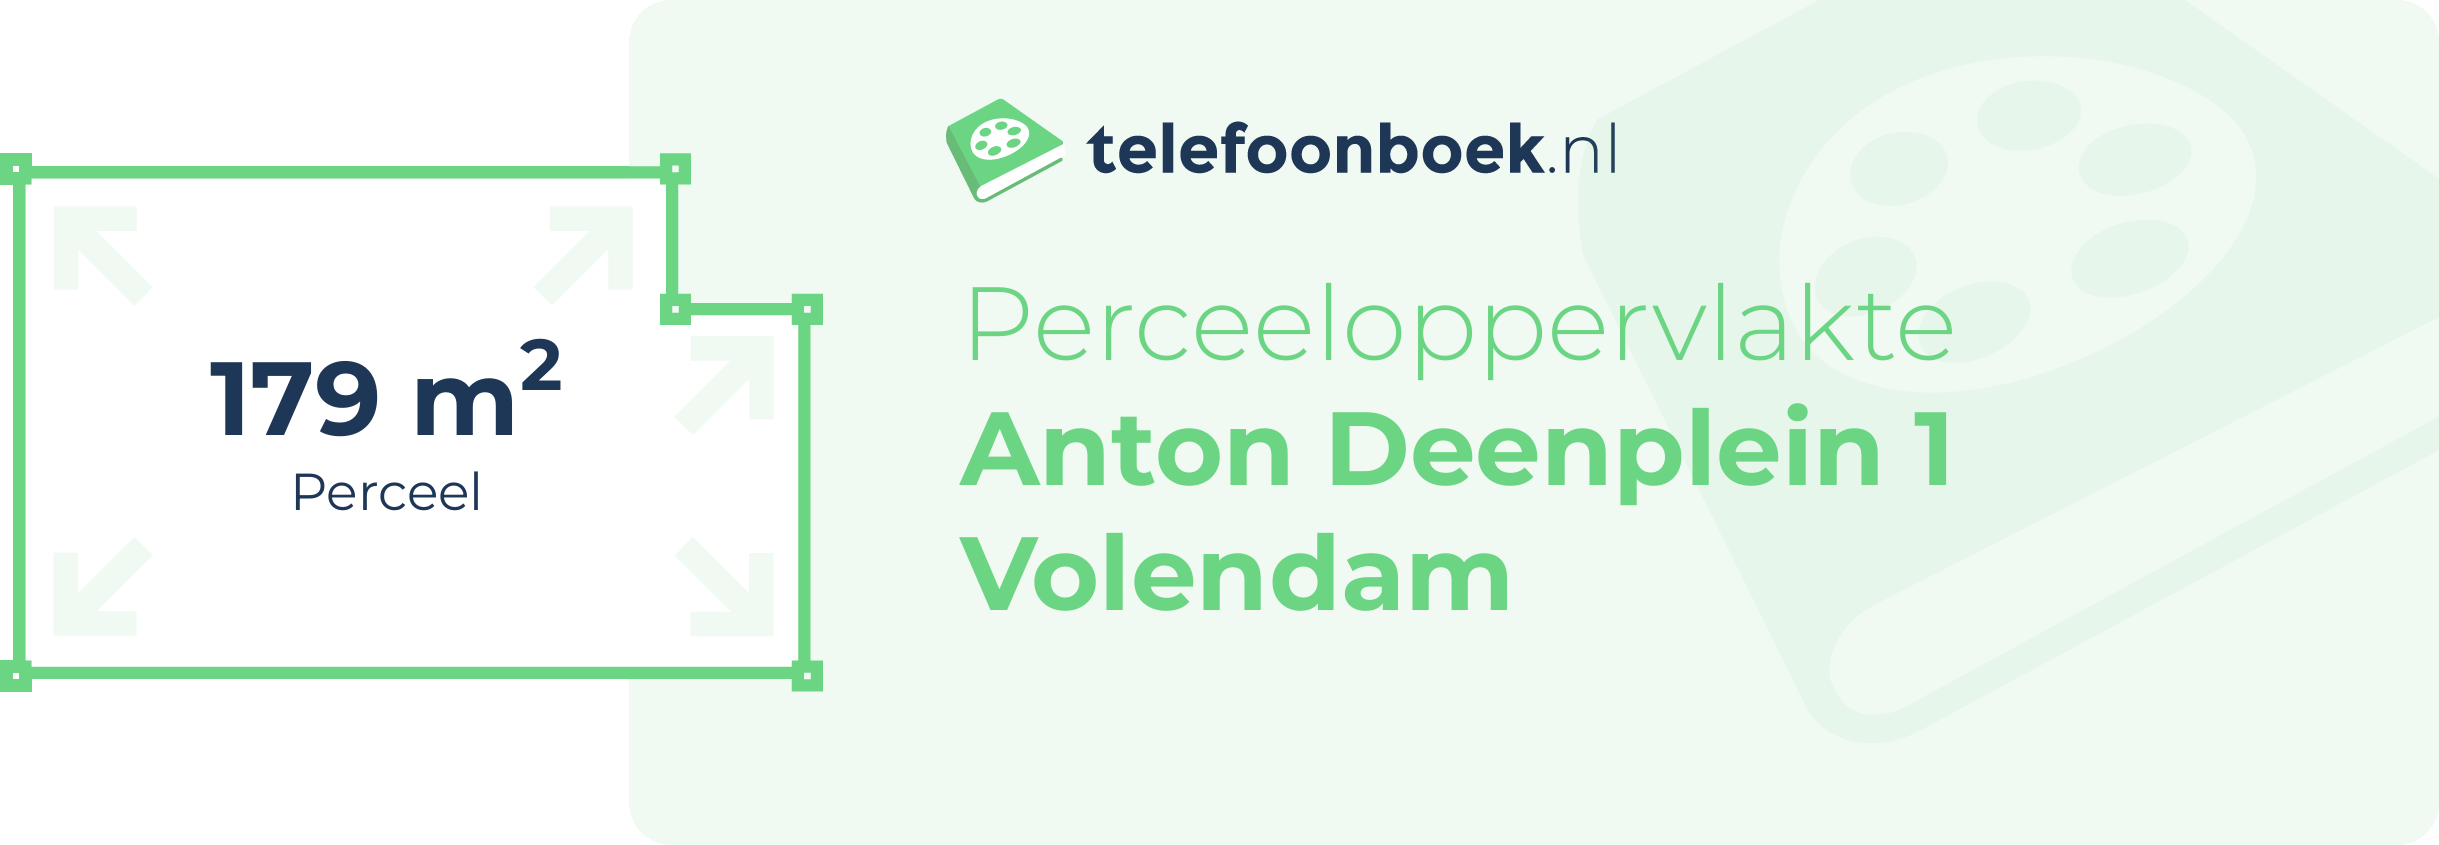 Perceeloppervlakte Anton Deenplein 1 Volendam